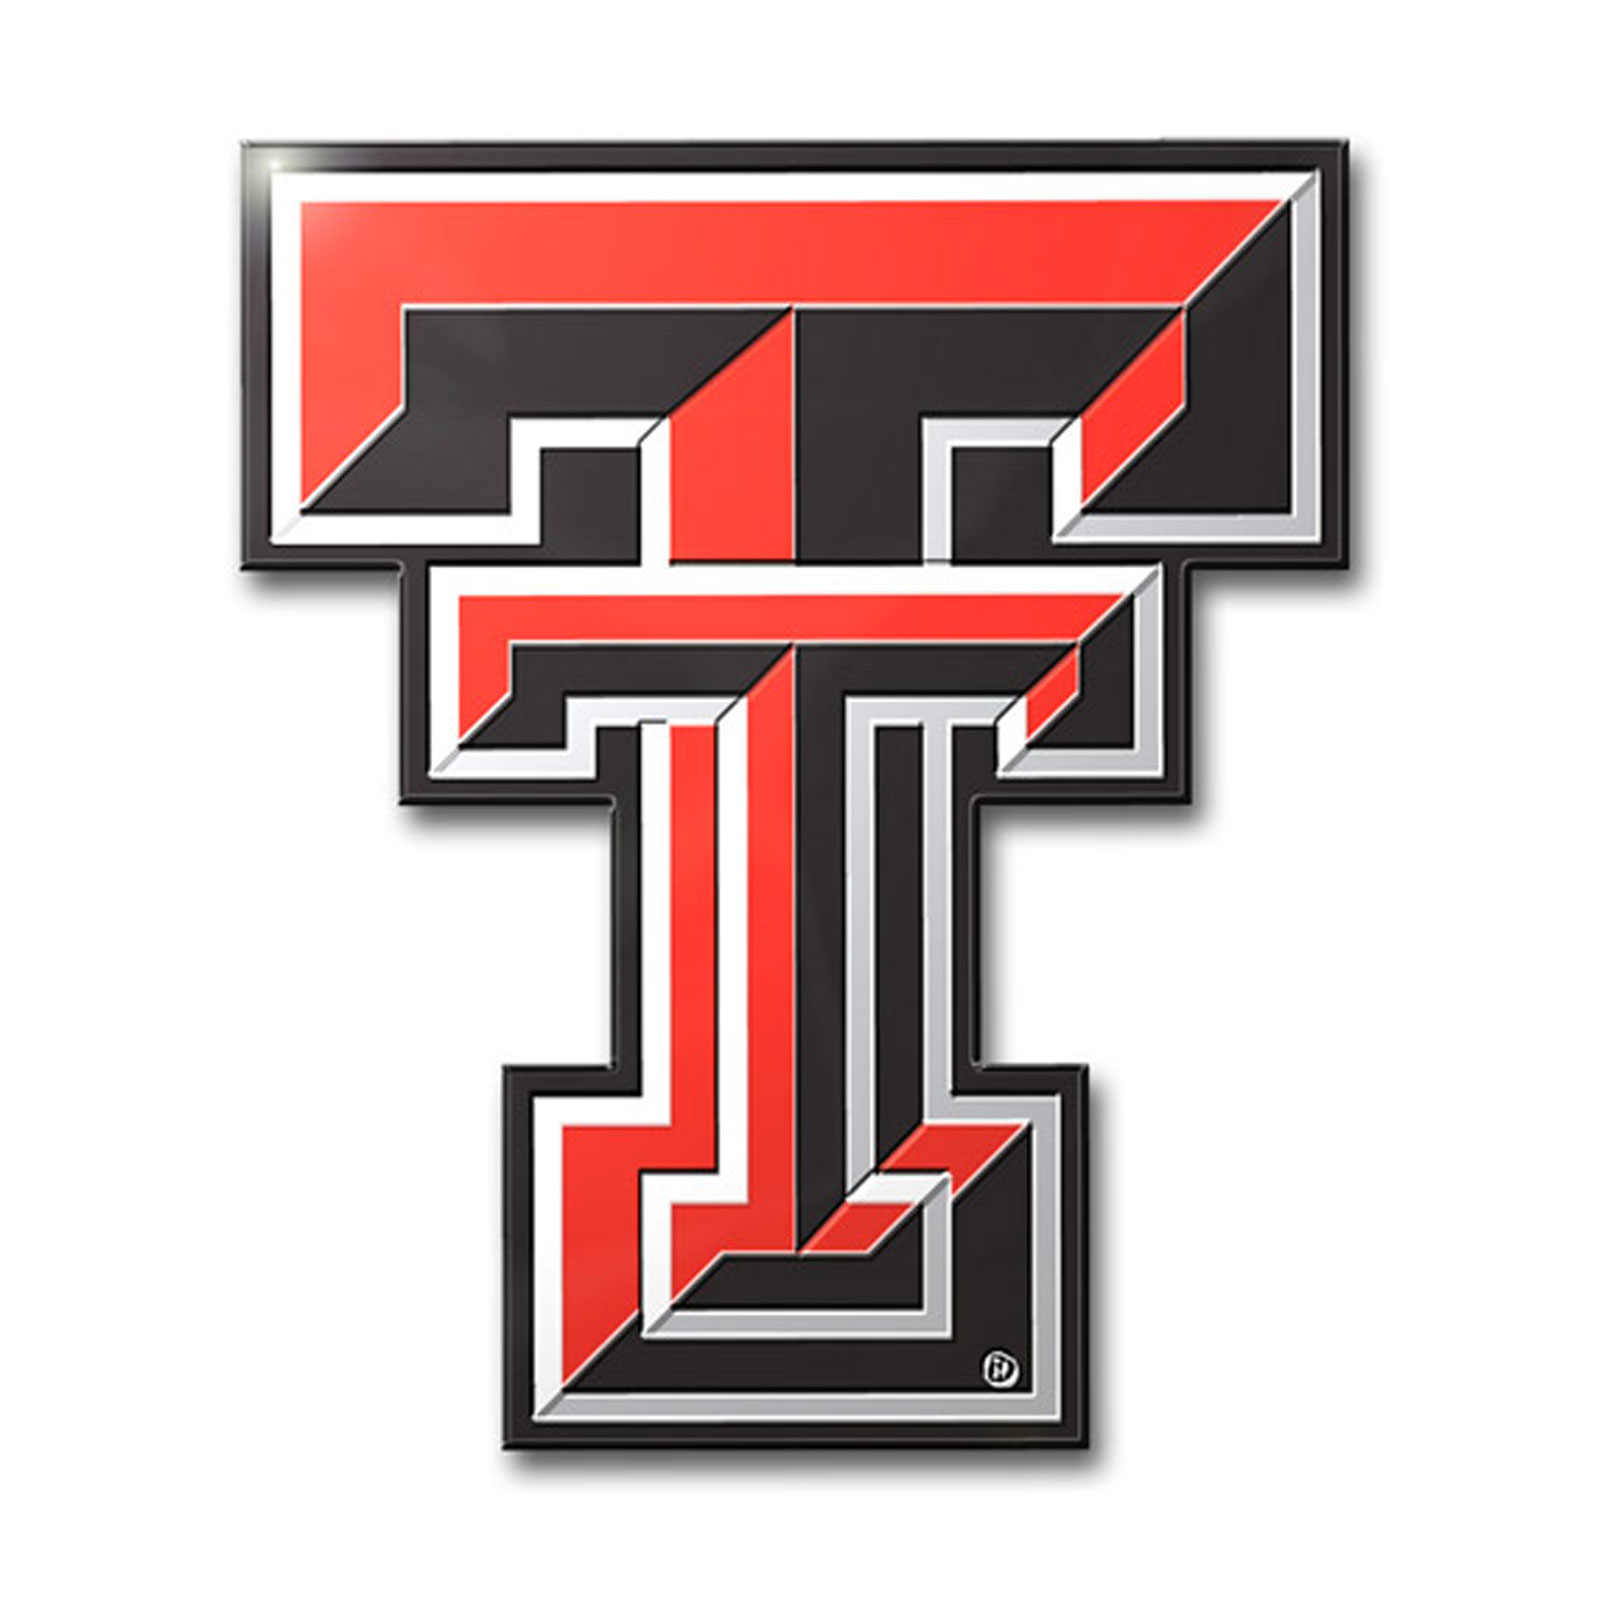 Details about Texas Tech Red Raiders Primary Logo Color Aluminum Car Auto  Emblem.